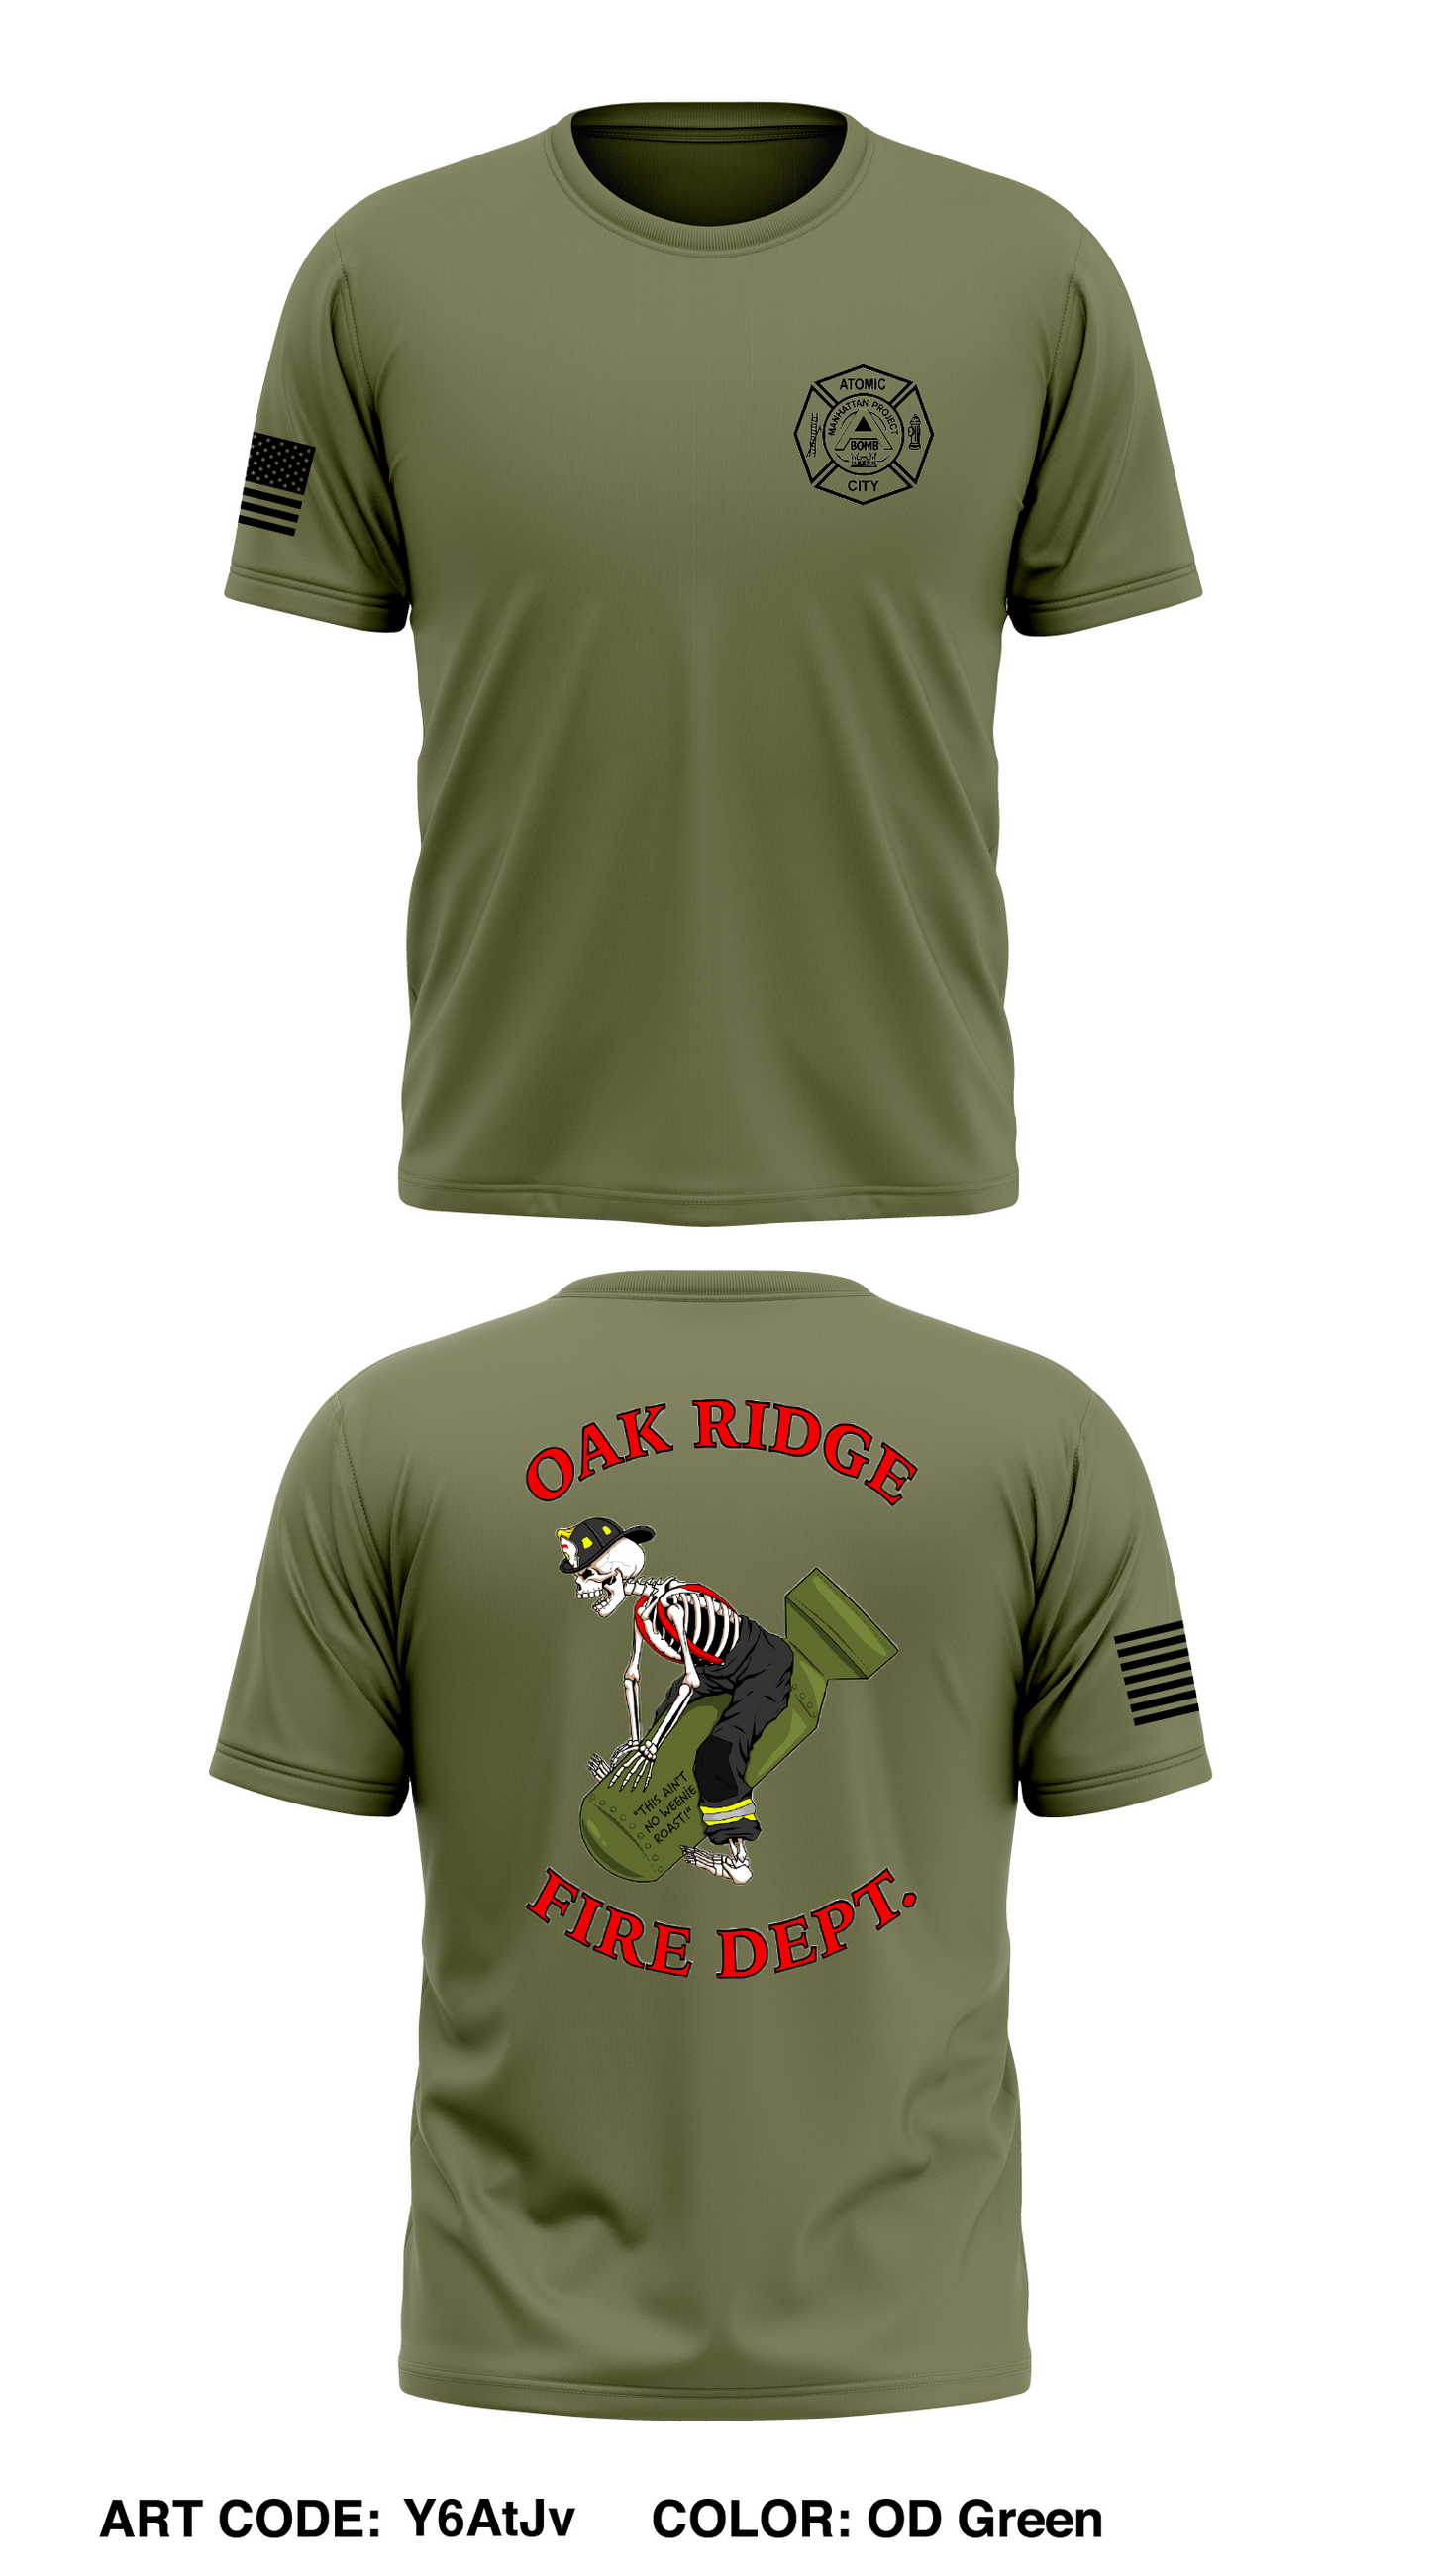 Oak Ridge Fire Department  Store 1 Core Men's SS Performance Tee - Y6AtJv